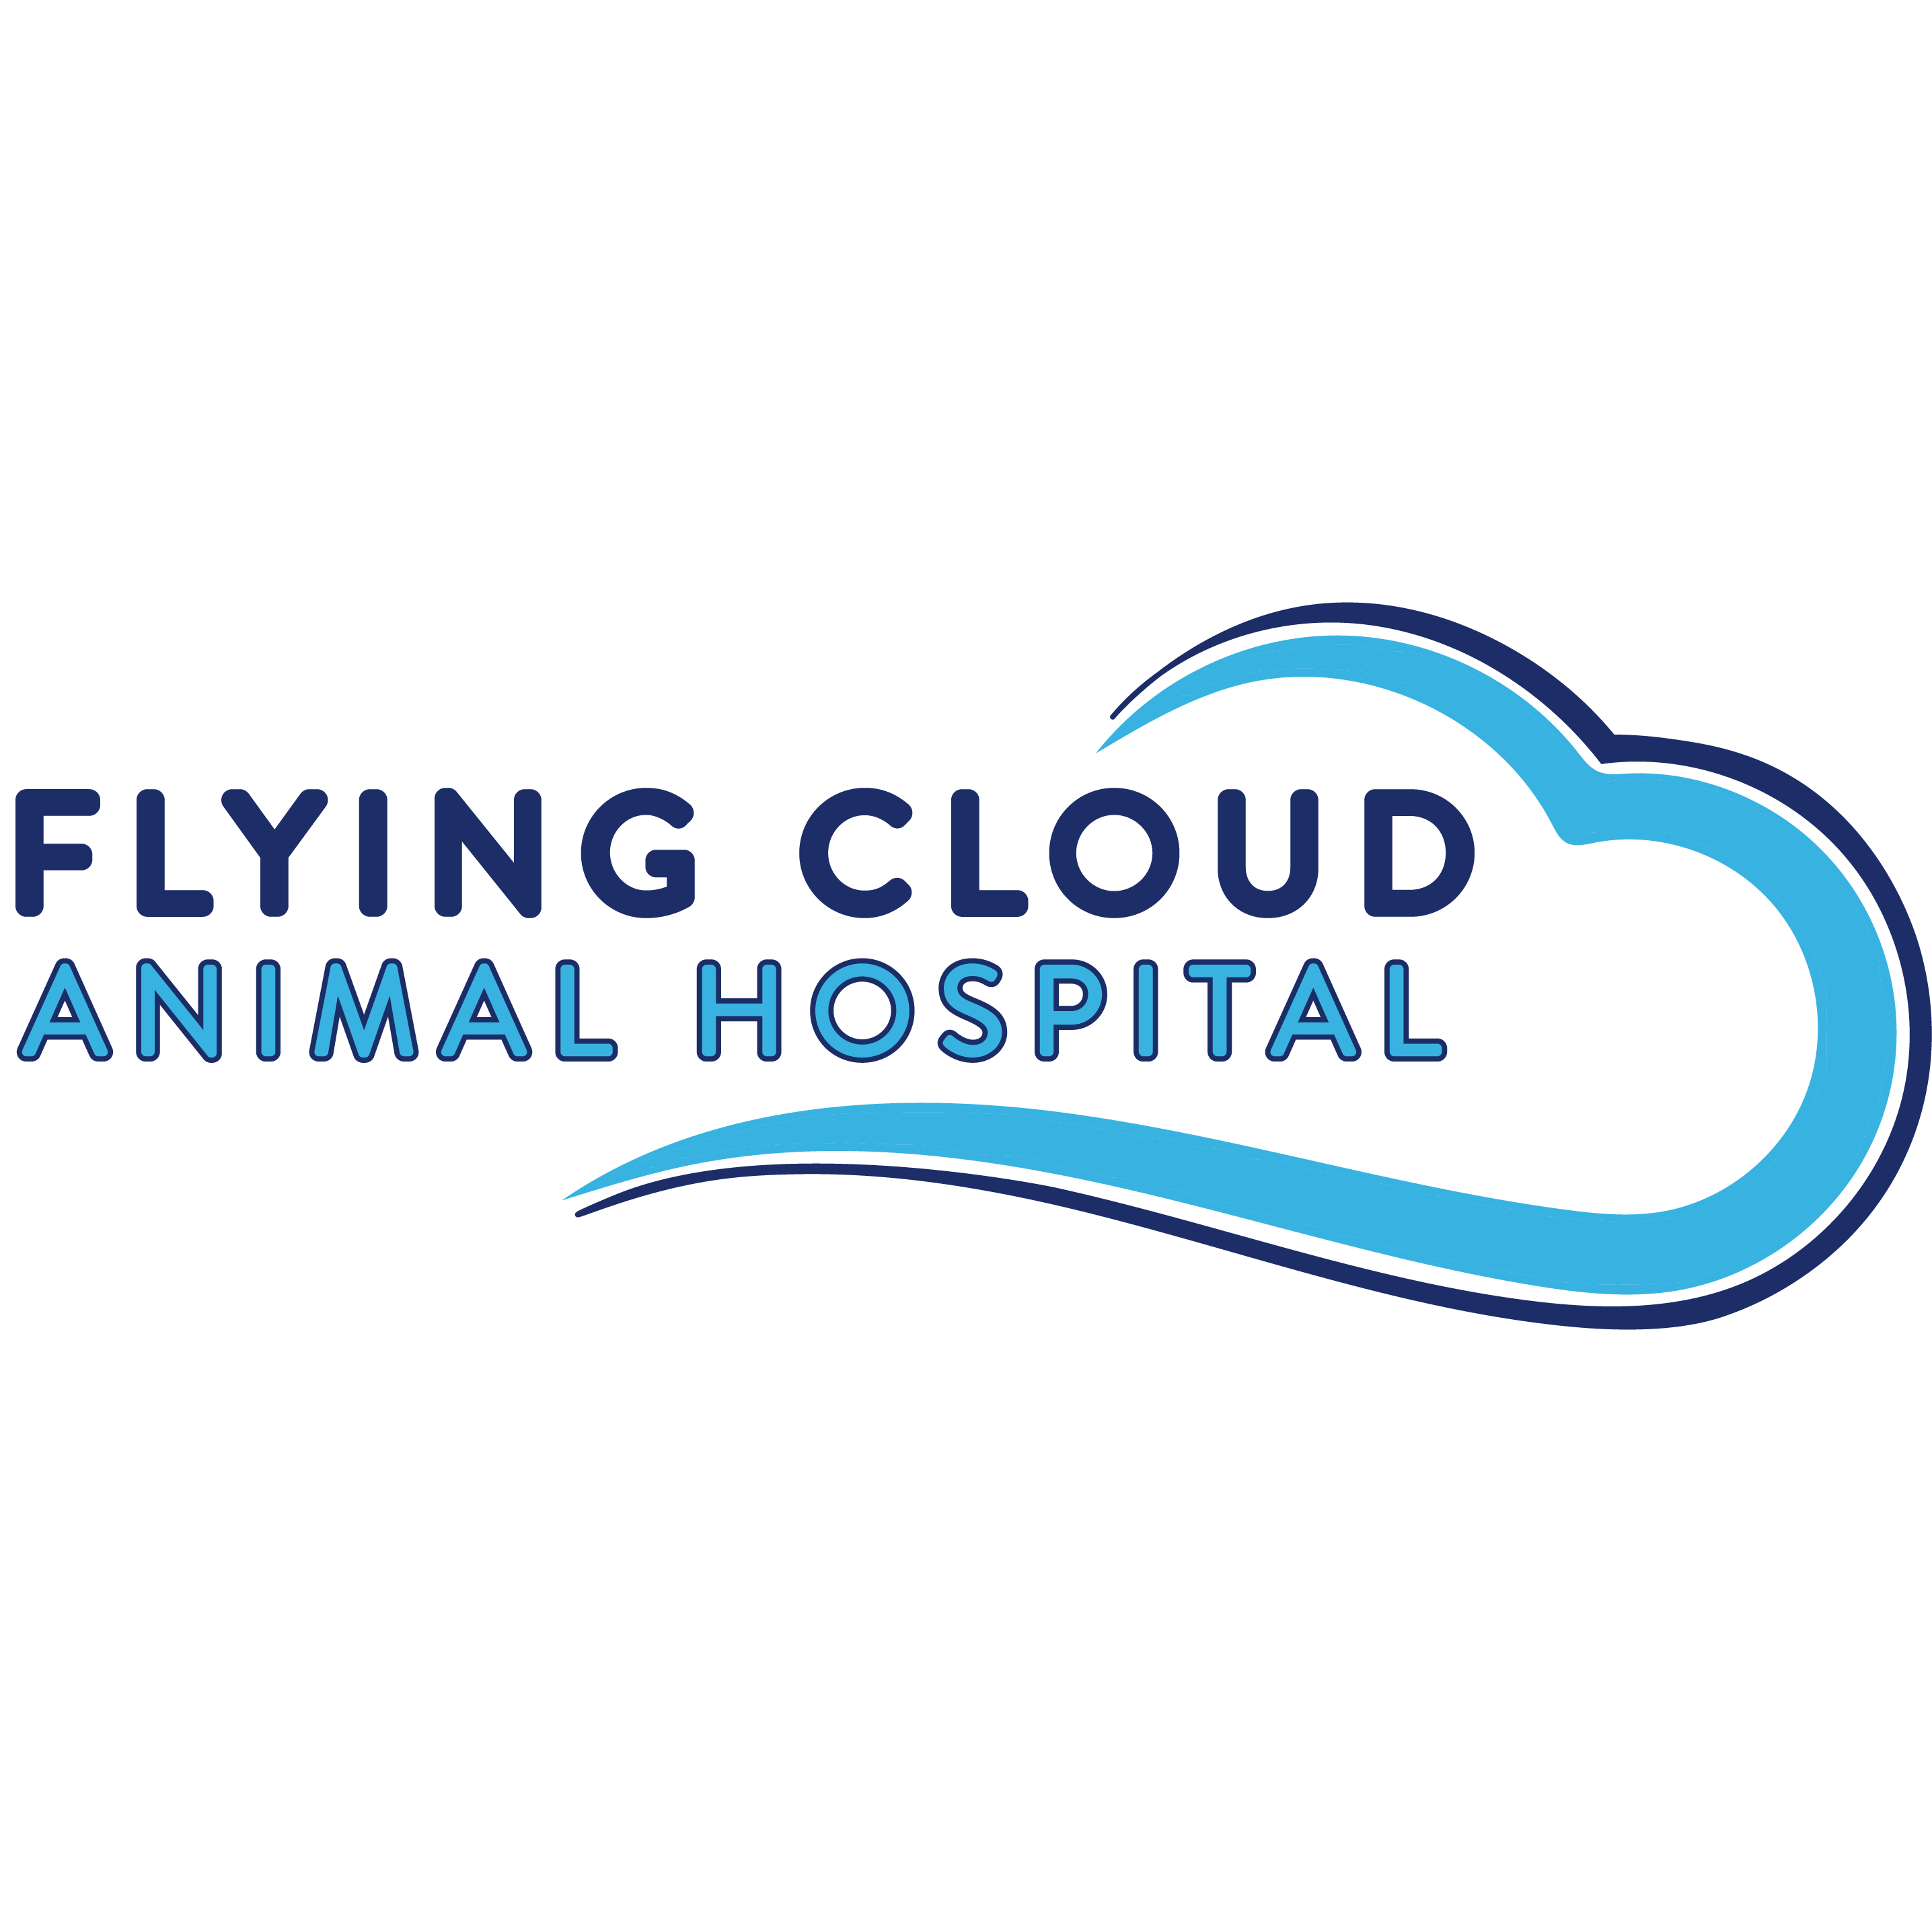 Flying Cloud Animal Hospital - Eden Prairie, MN 55344 - (952)941-8676 | ShowMeLocal.com